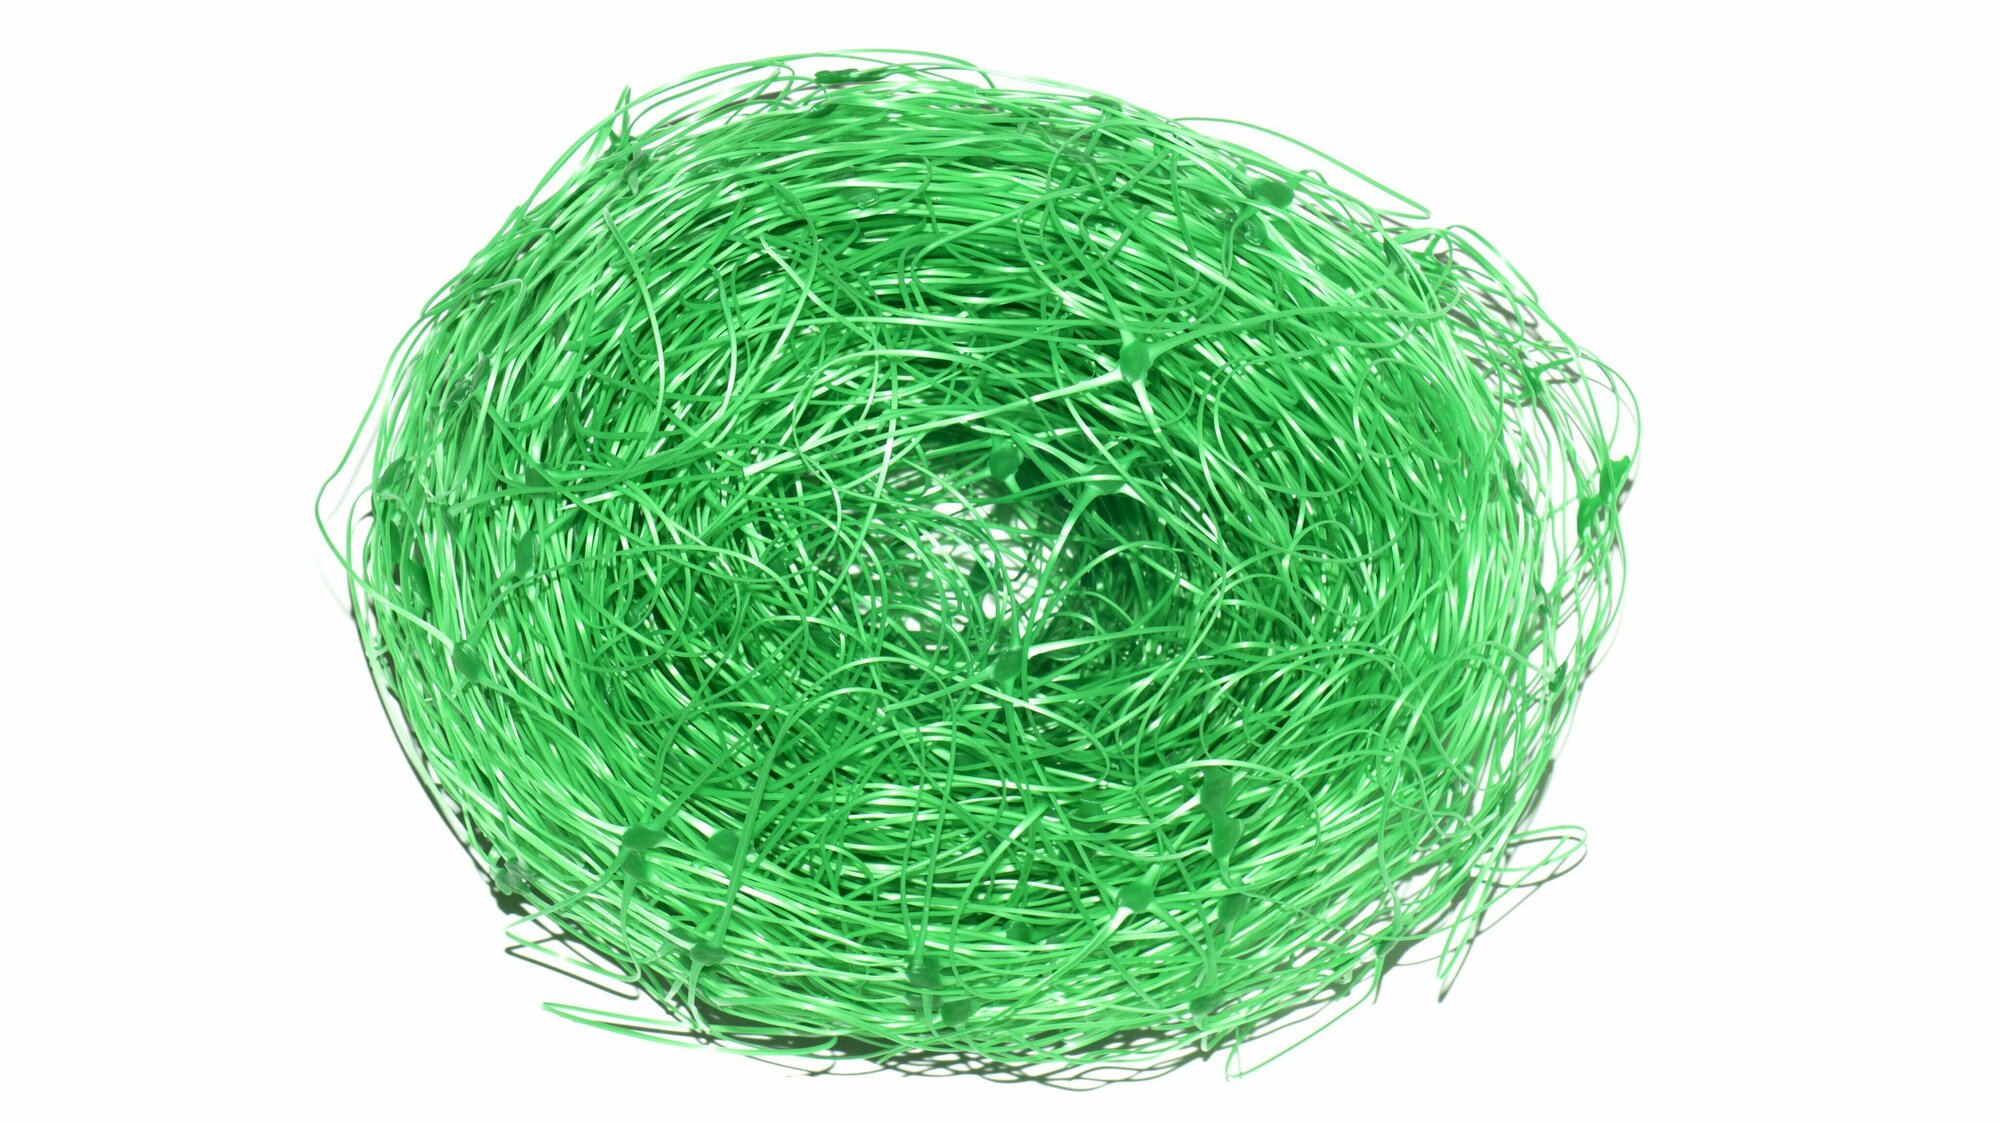 Шпалера, Опора для растений, Сетка зеленая 10 м2 (2x5 м) яч. 150*170 мм - фотография № 2